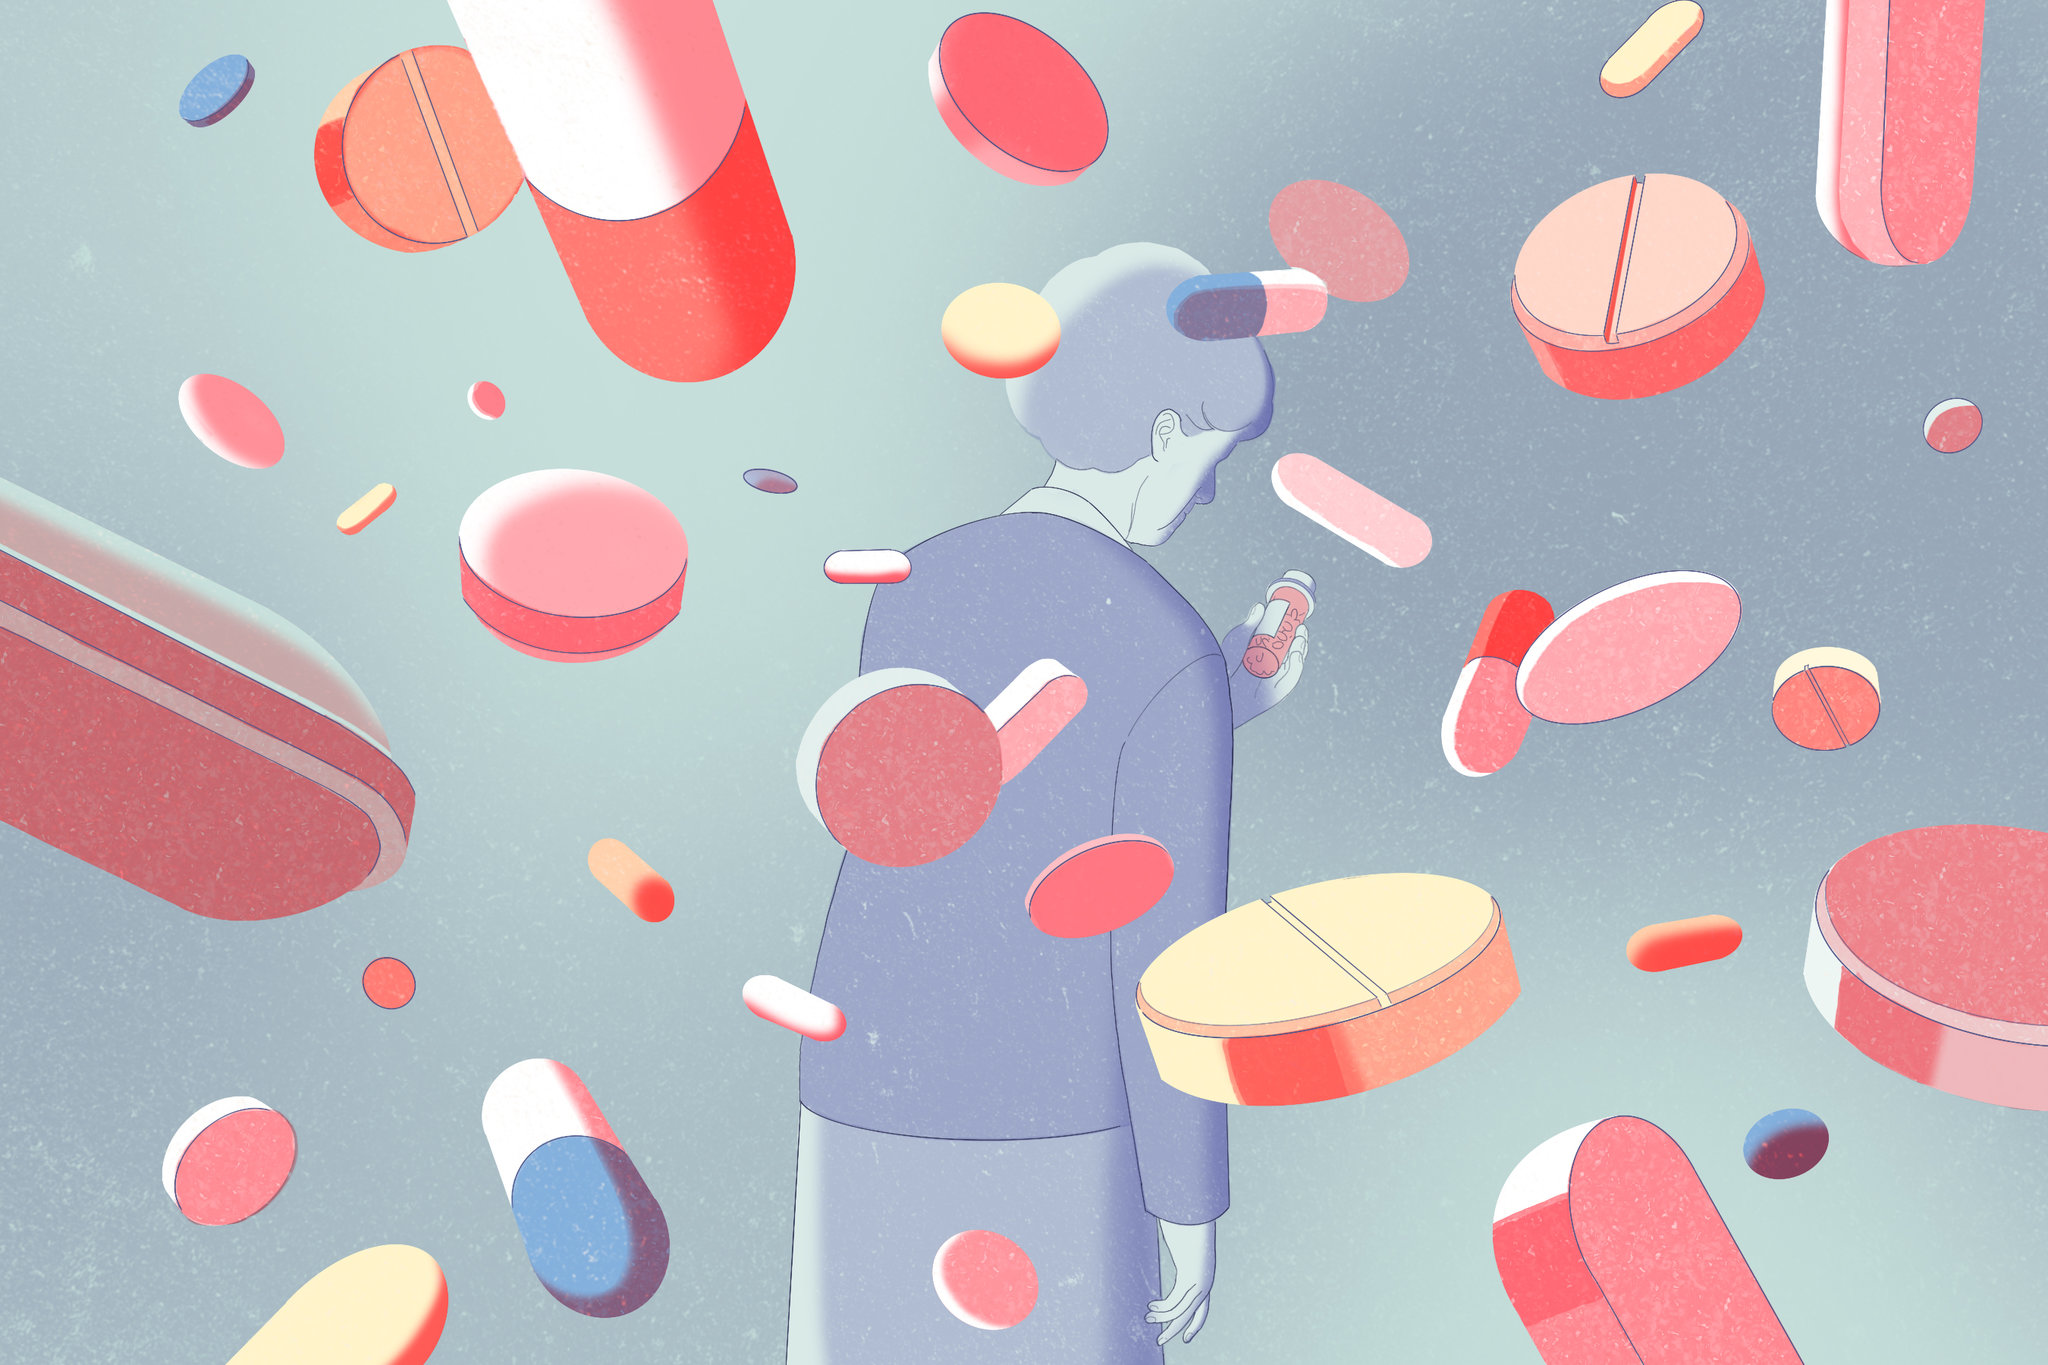 Older Americans Are Awash in Antibiotics